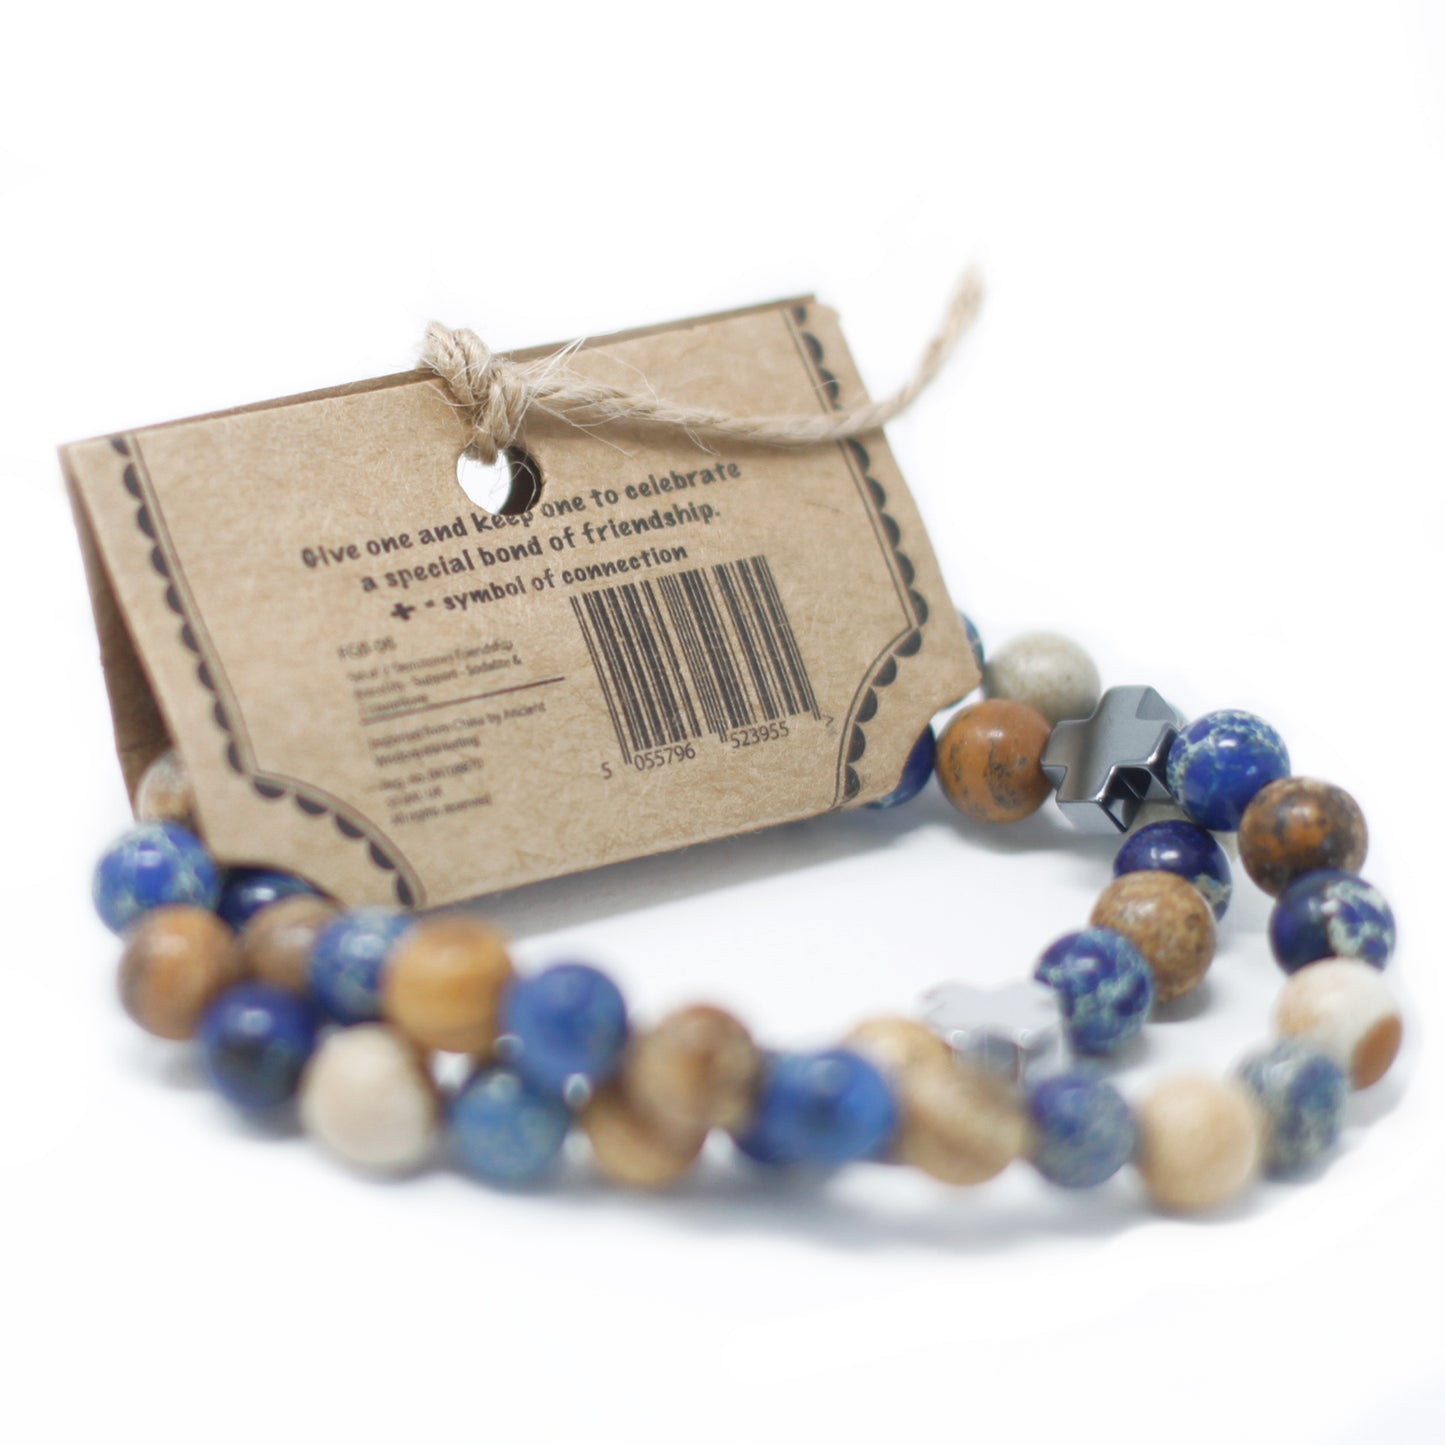 Set of 2 Gemstones Friendship Bracelets - Ethernity - Leopard Skin Jasper & Lava Stone